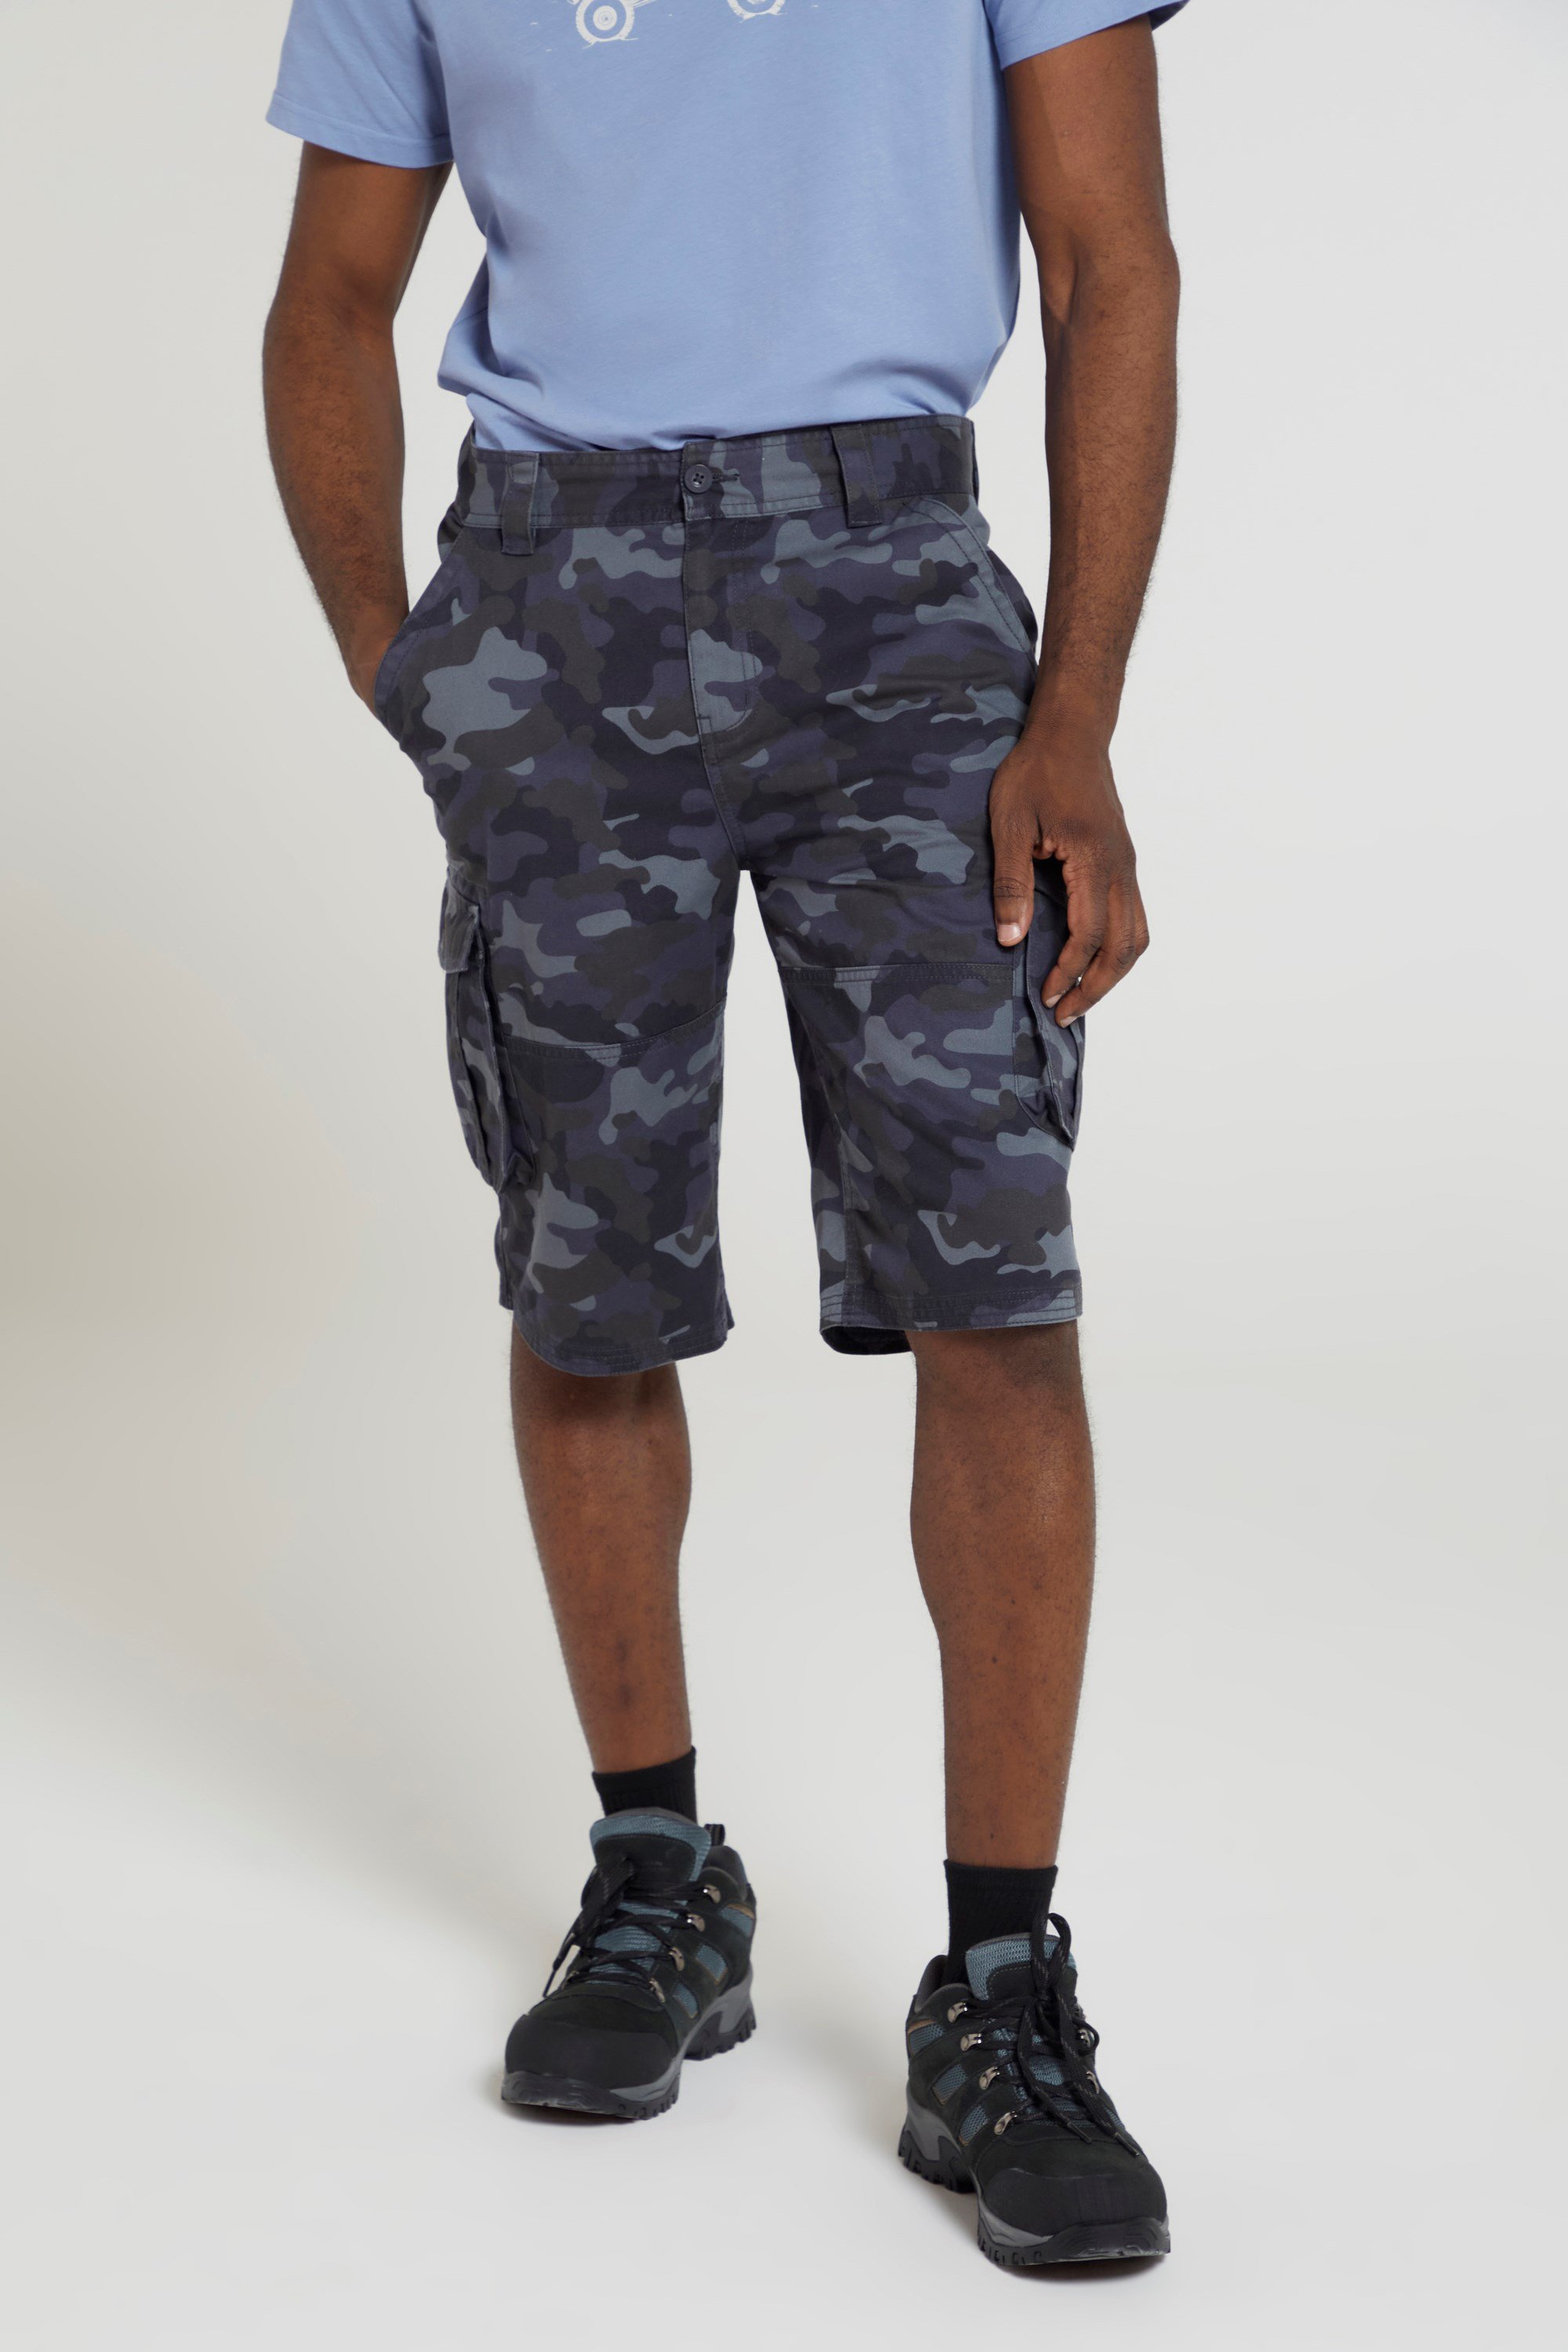 Mountain Warehouse Mens Camo Cargo Shorts - Blue | Size W42